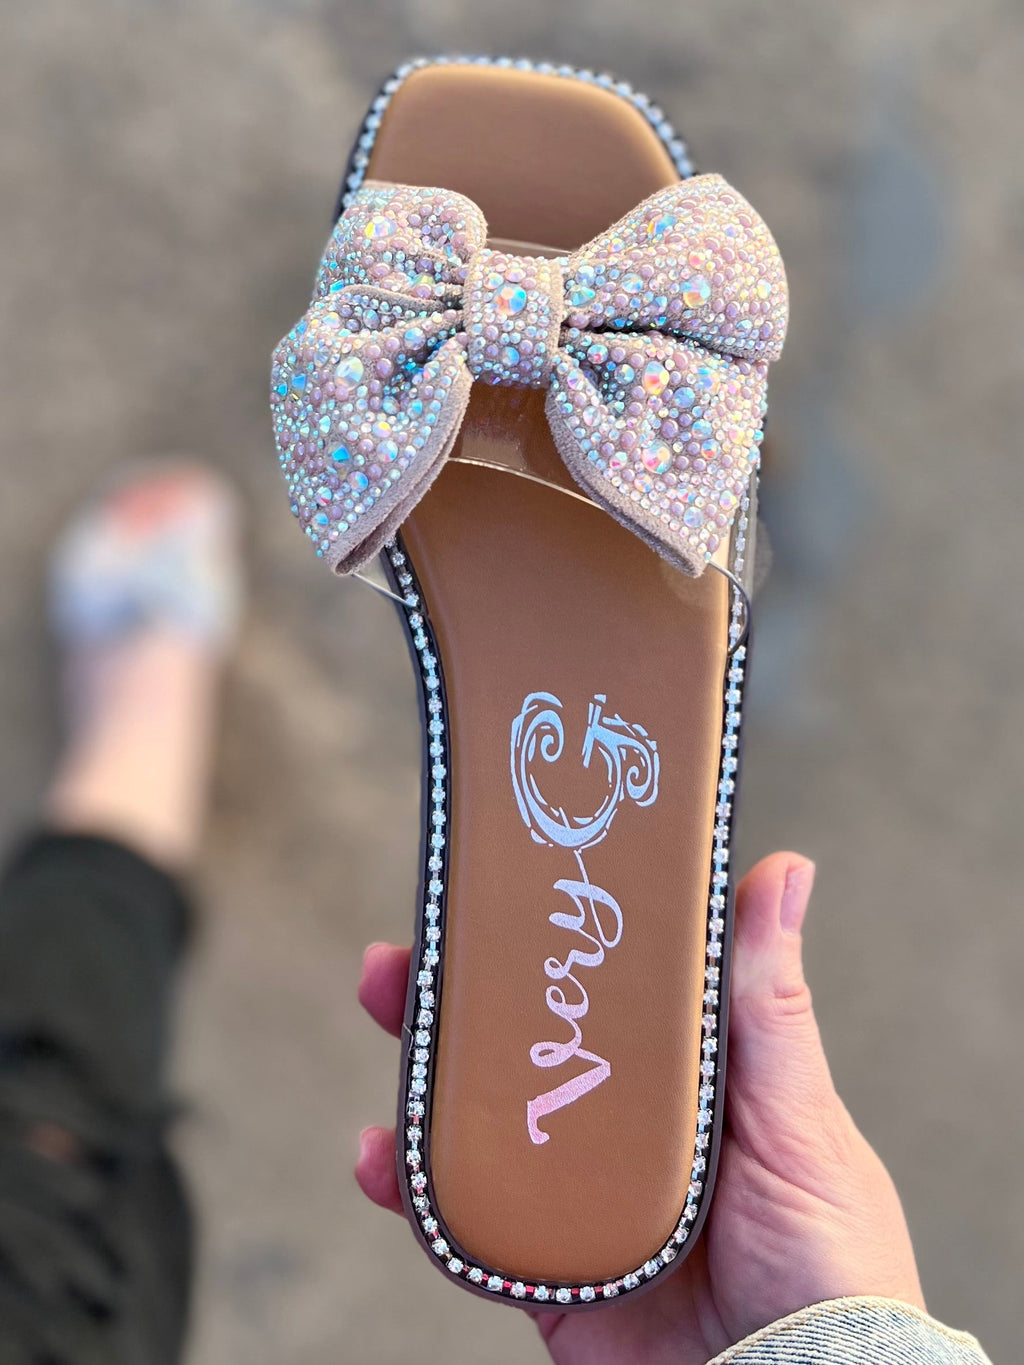 Cinderella's Sandals | gussieduponline